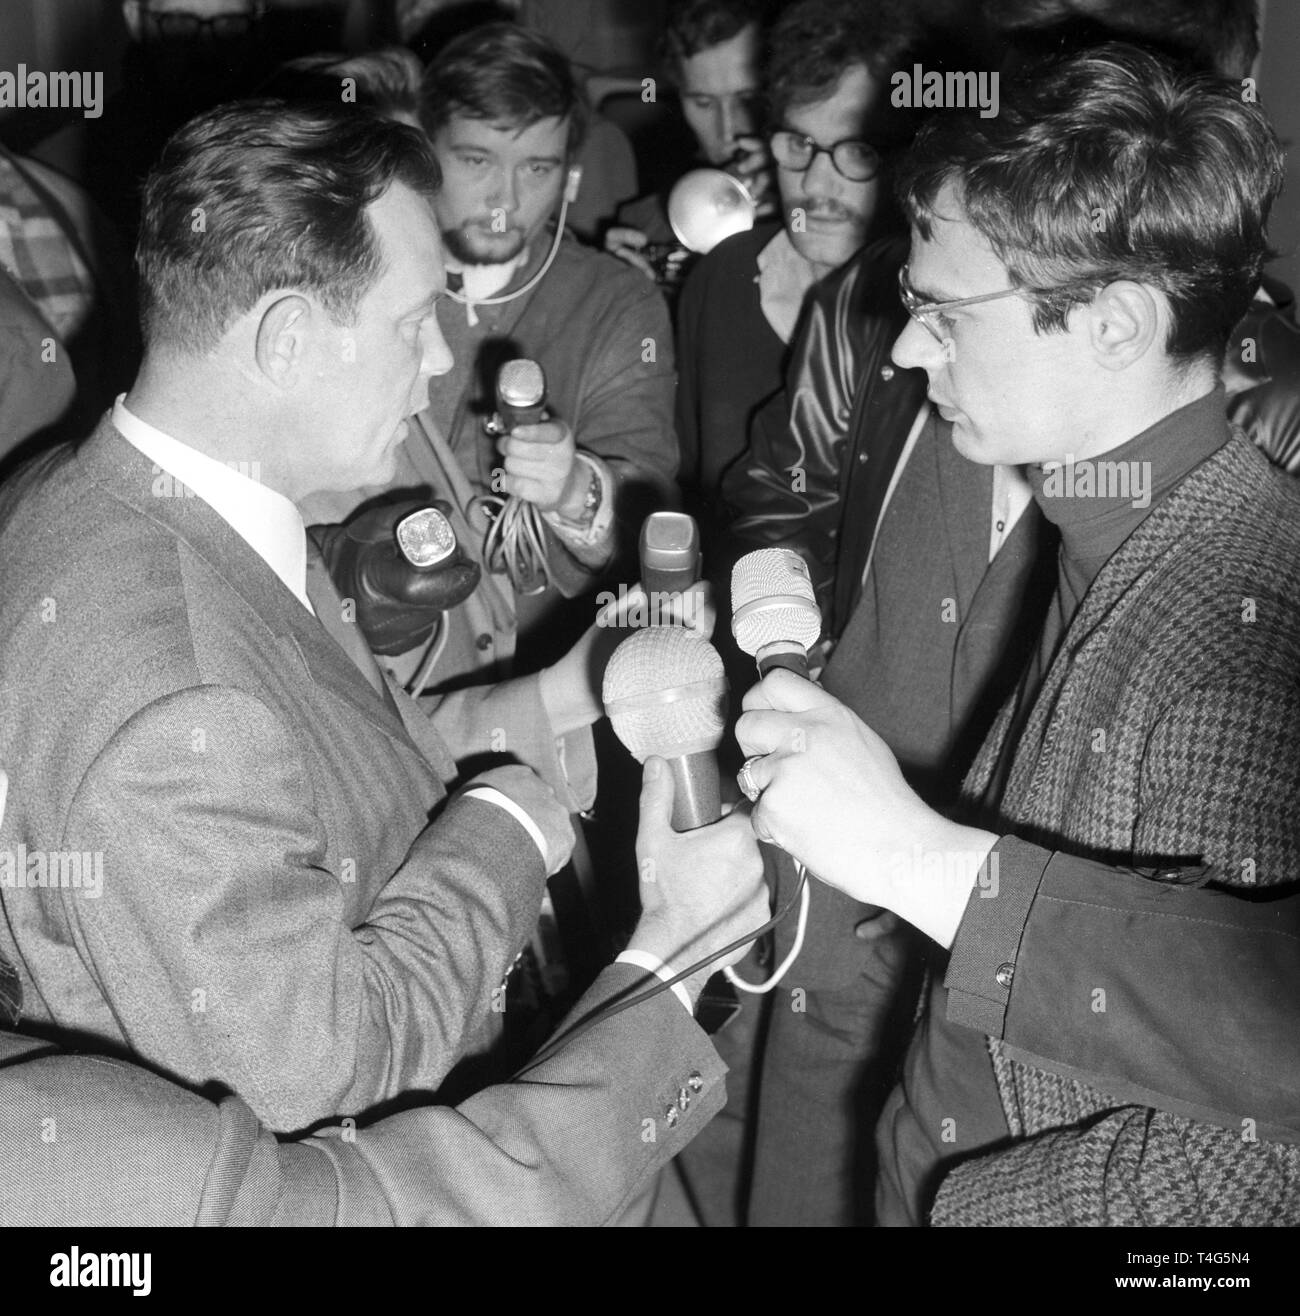 Director of SFB, Sender Freies Berlin (translates as 'Radio Free Berlin'), Franz Barsig (l) talks to Knut Nevermann (r), former AStA chairman of the Free University on 15 April in 1968. | usage worldwide Stock Photo